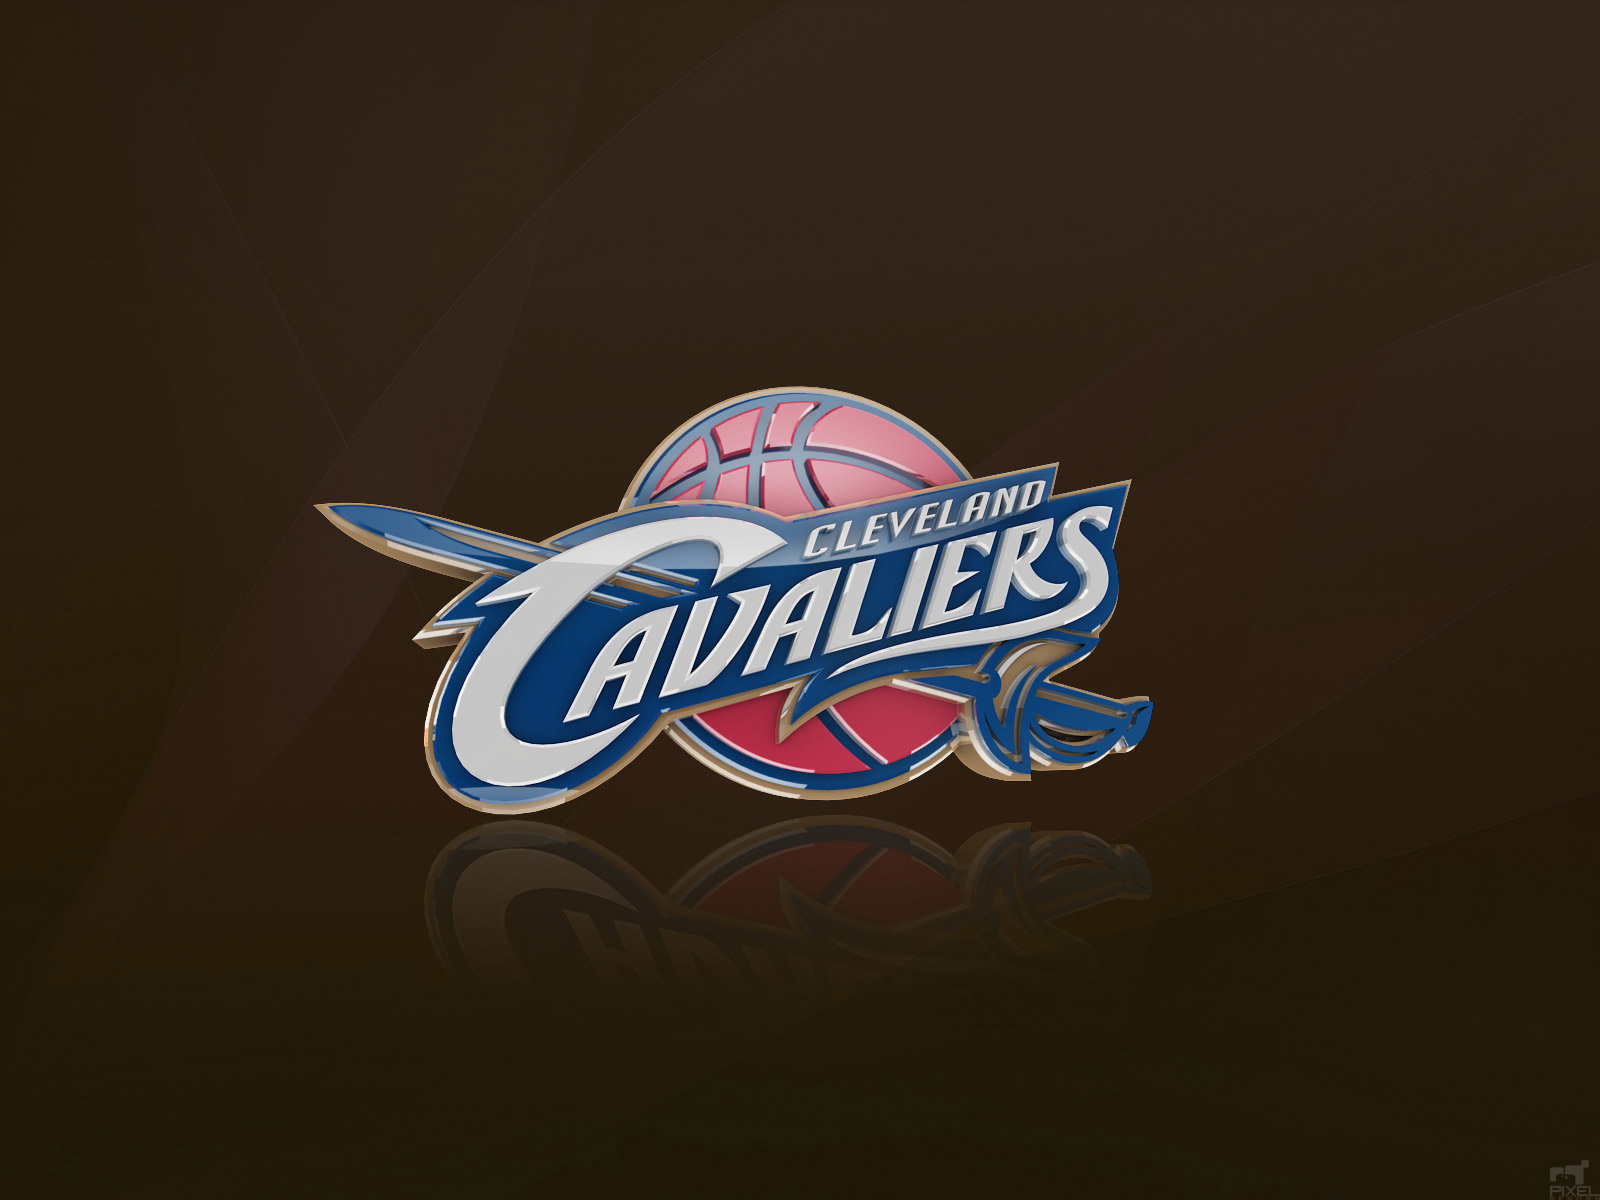 Cleveland Cavaliers rumors